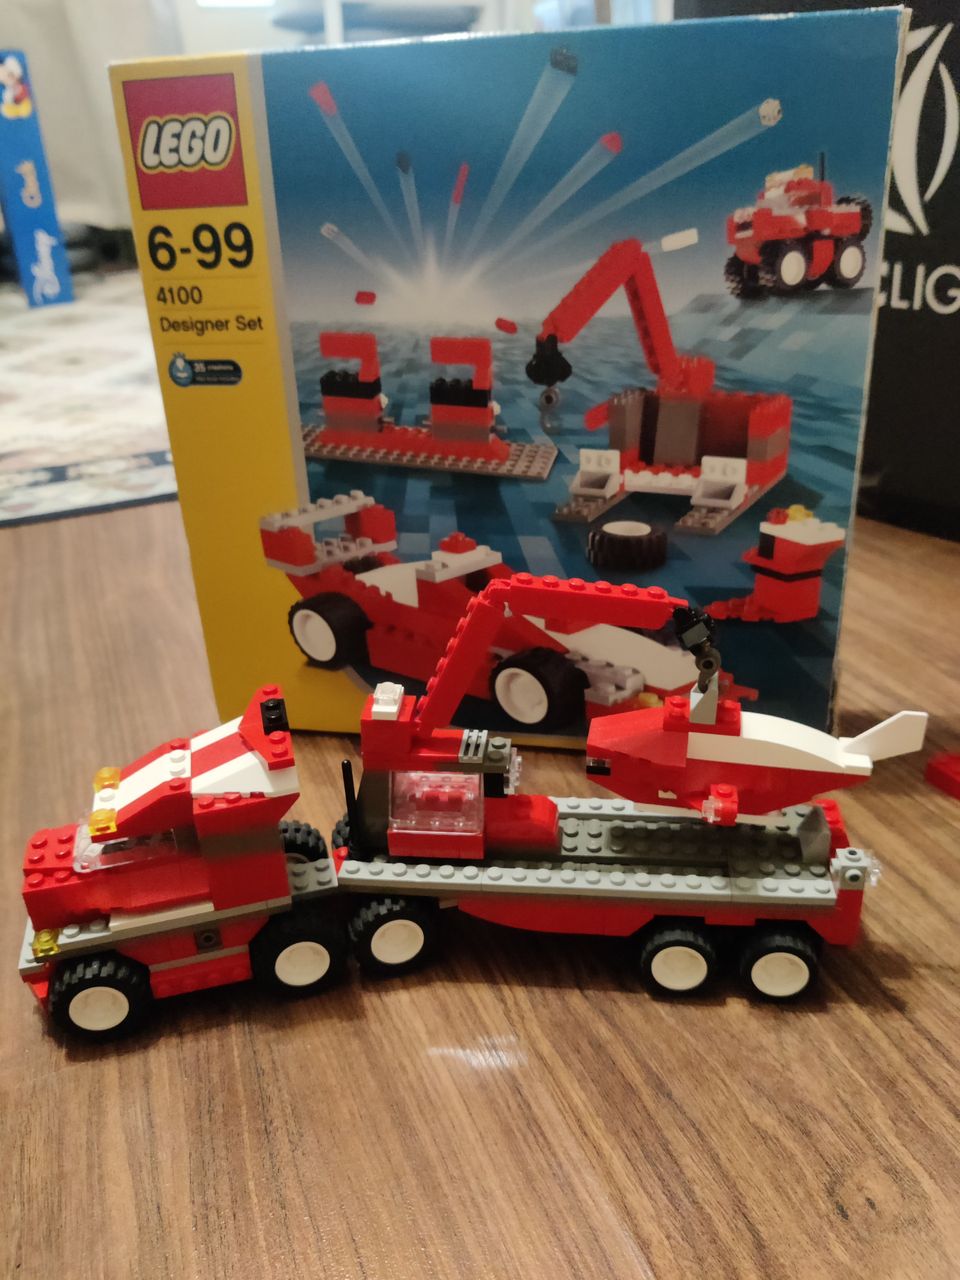 Lego 4100 Designer set